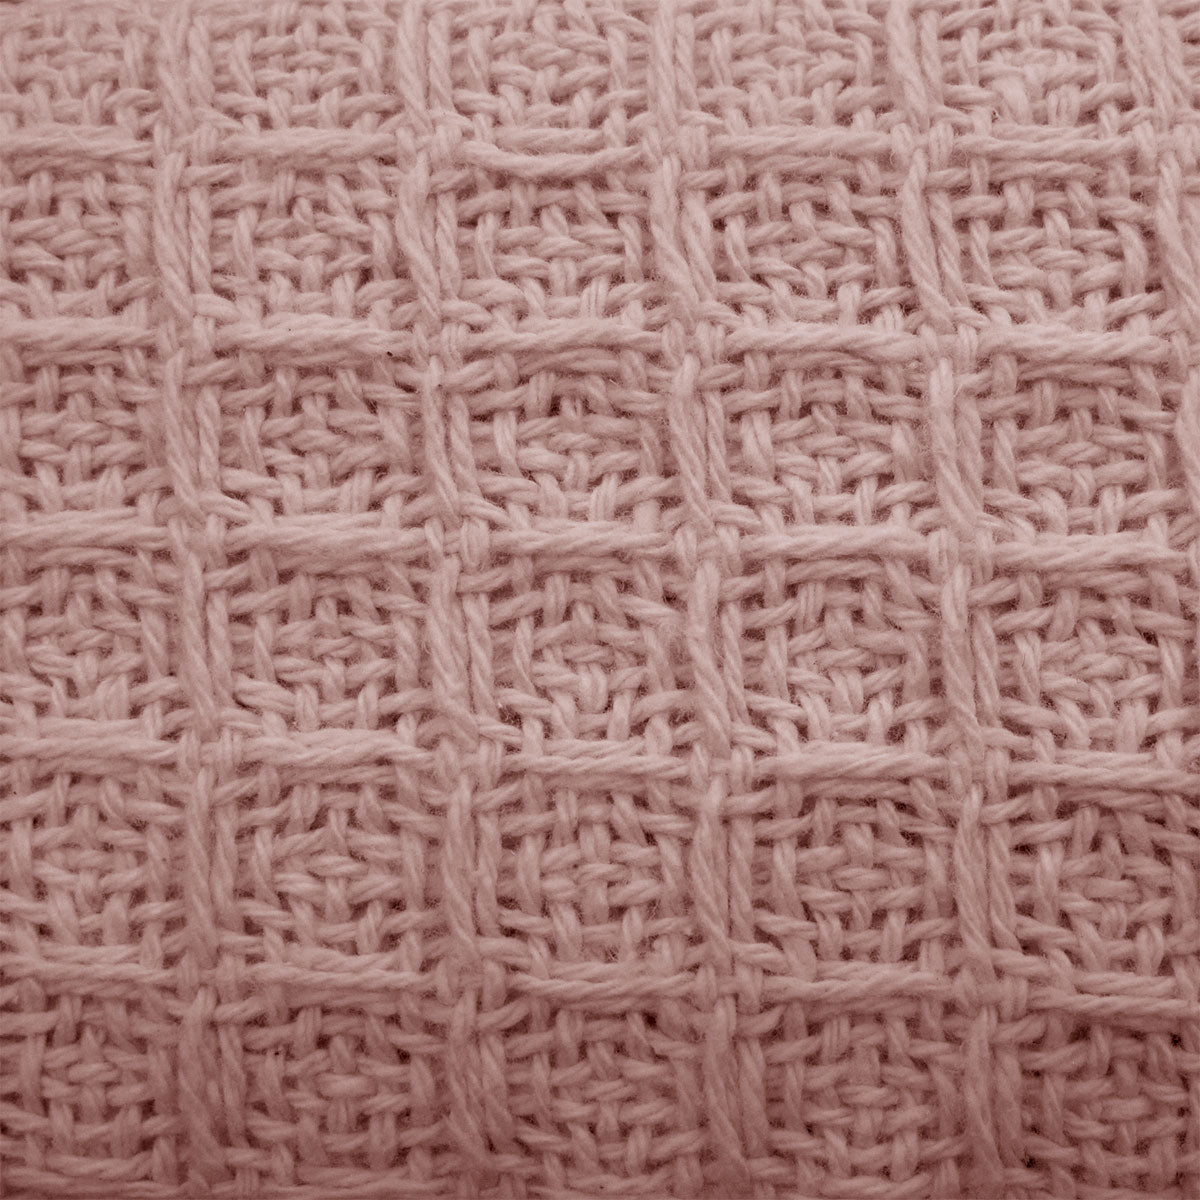 Cotton Waffle Blanket Dusty Pink Queen - Newstart Furniture